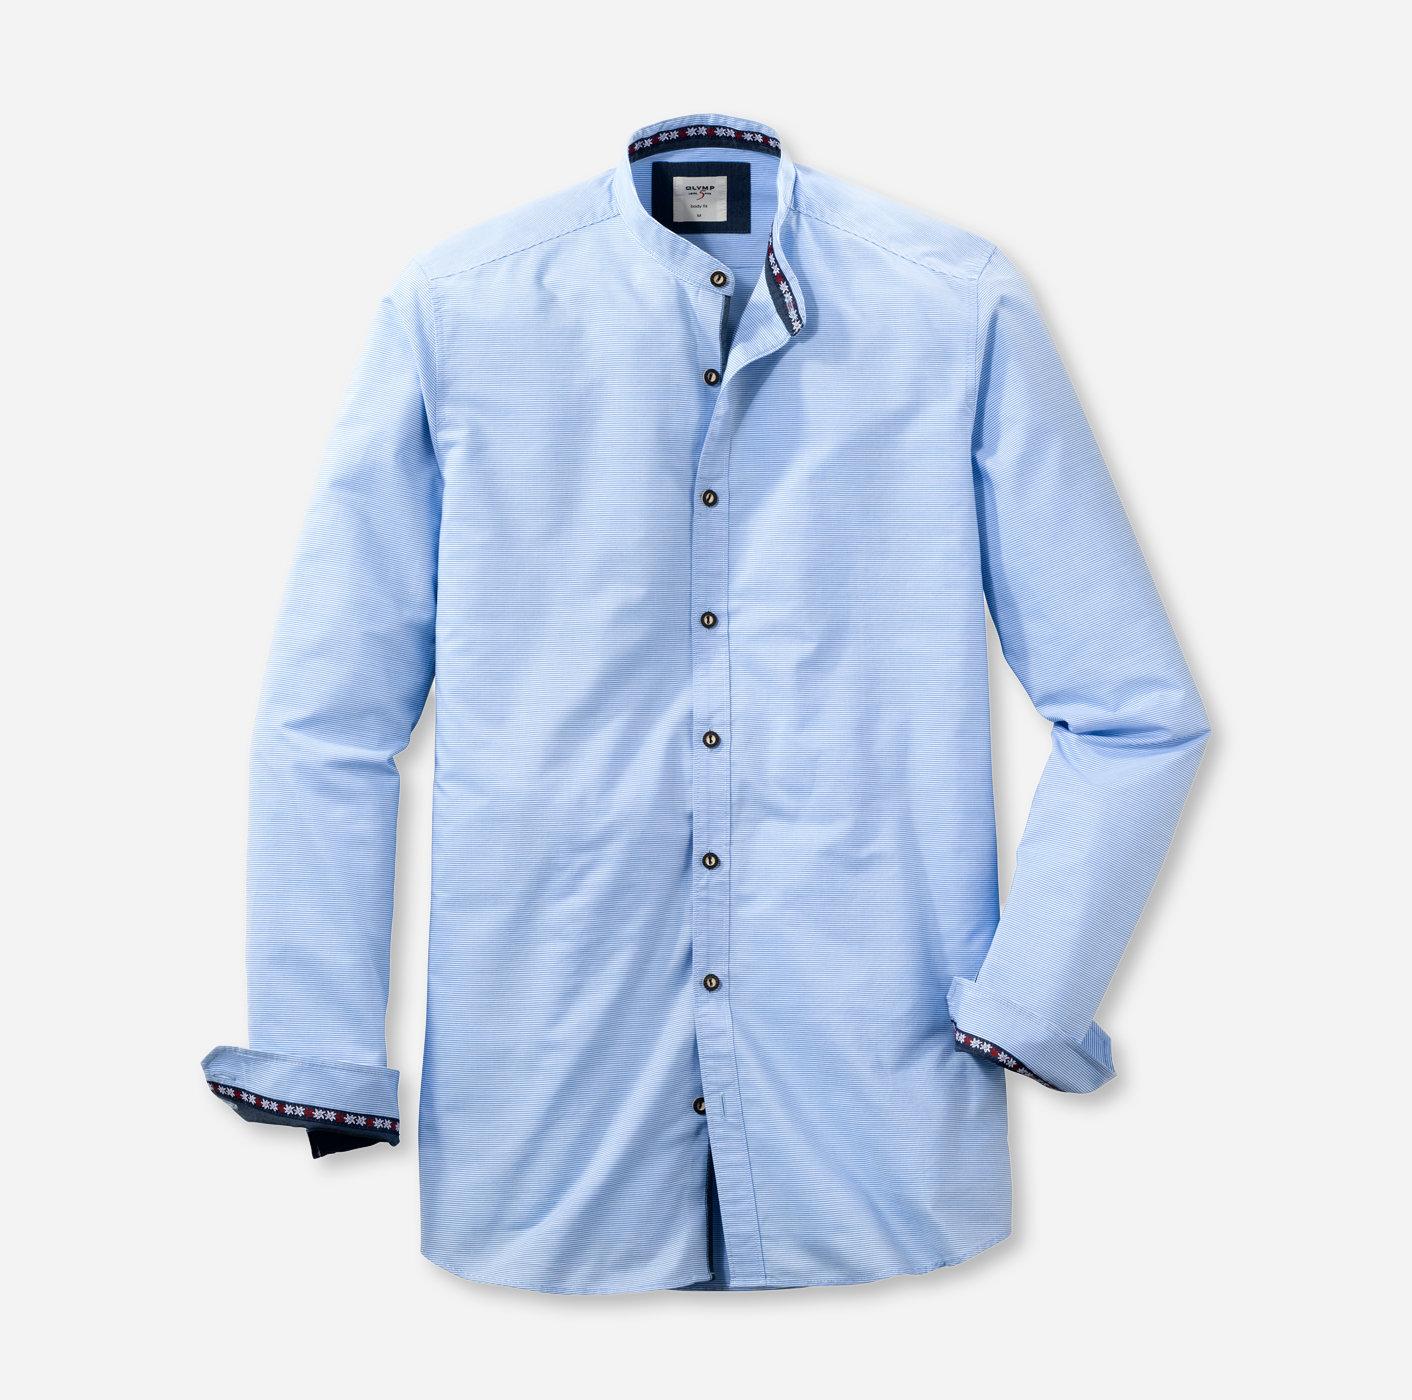 Stehkragen - 39006411 body Trachtenhemd, OLYMP | fit, Bleu